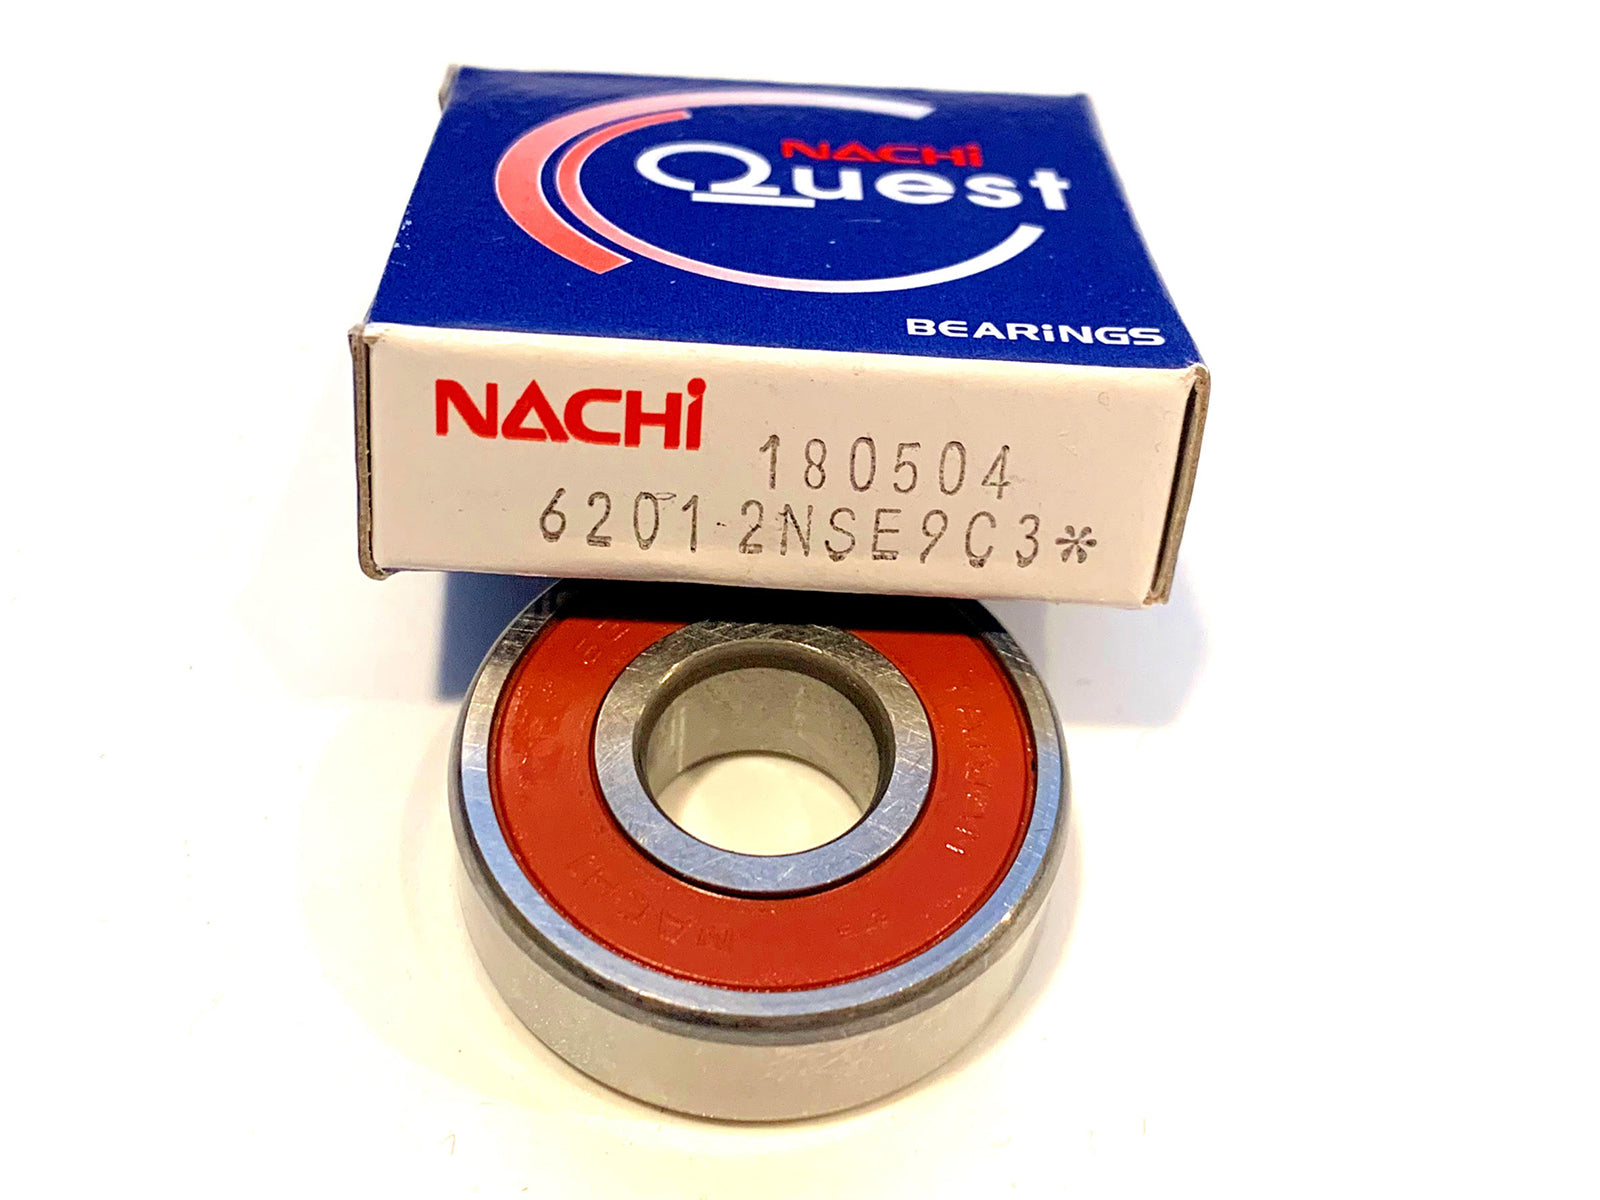 6201-2NSE9 C3 NACHI Ball Bearing - ppdistributors